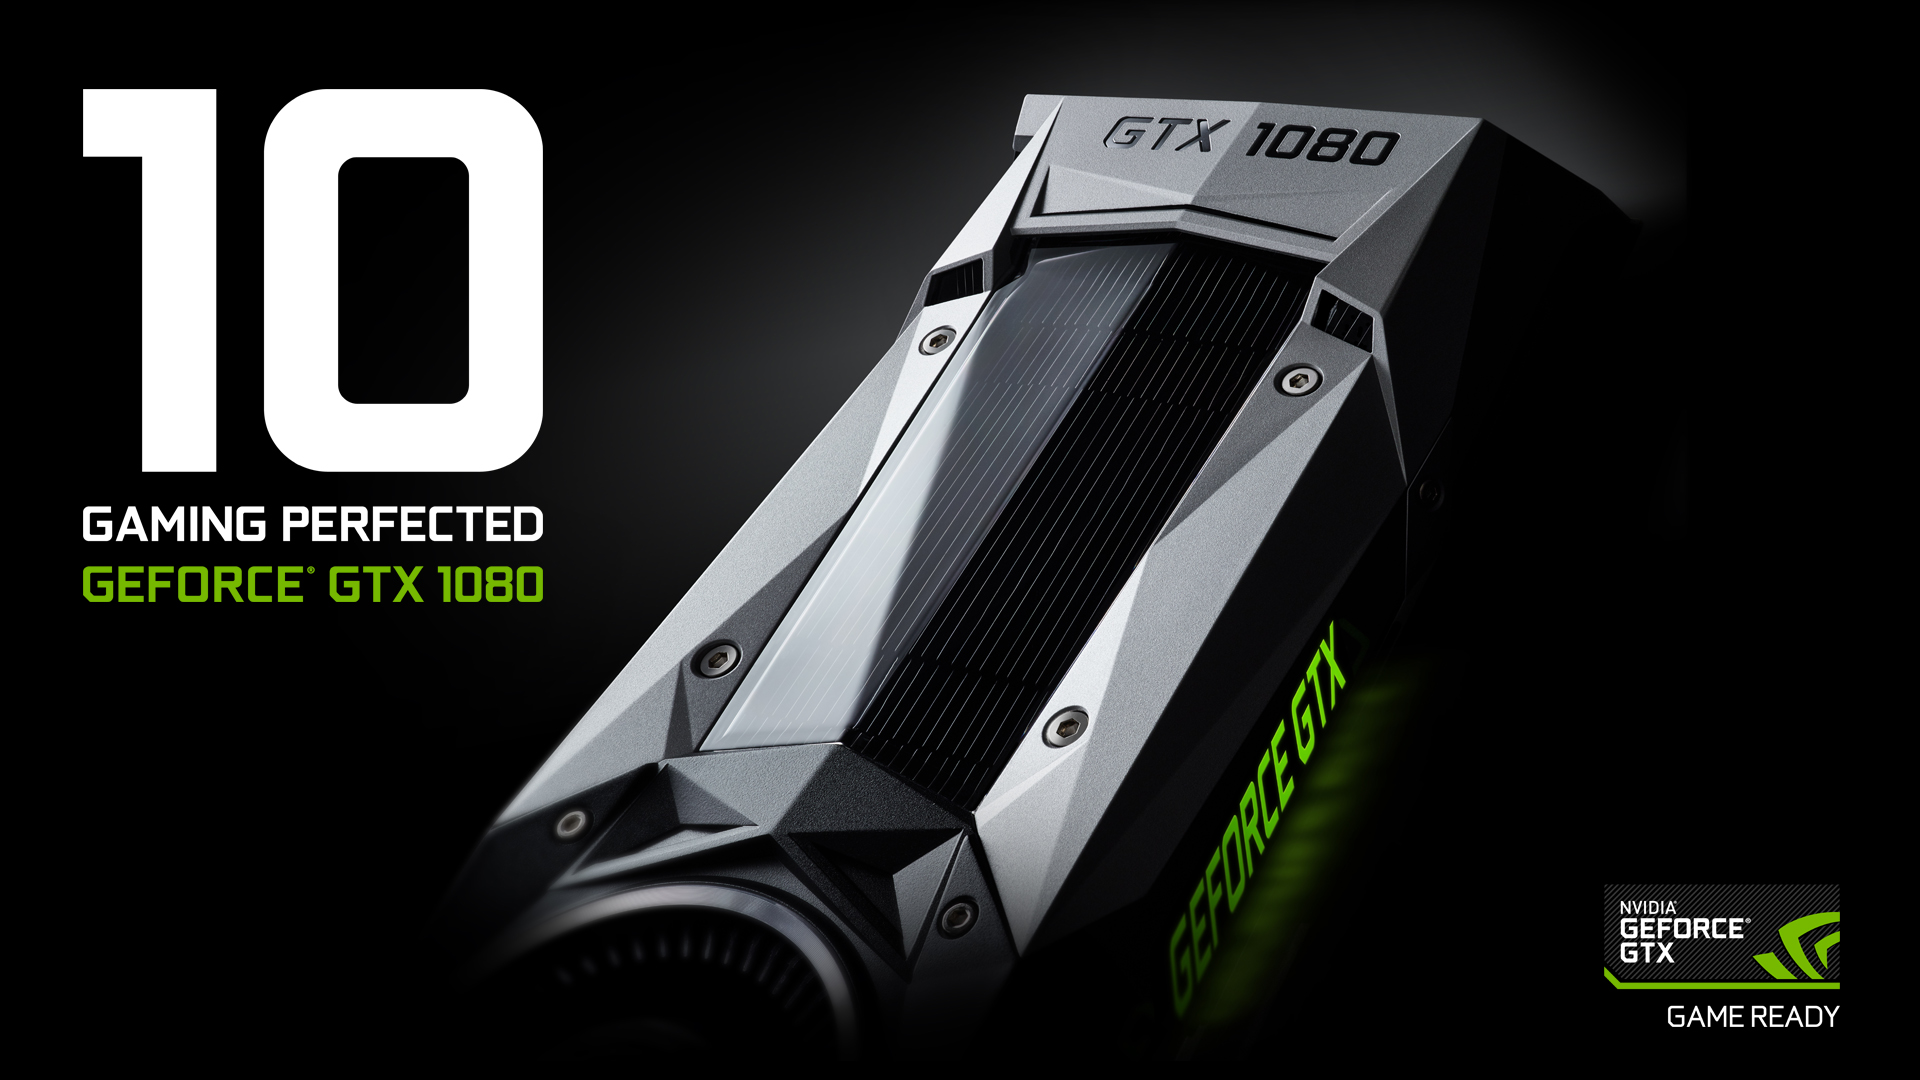 Introducing The GeForce GTX 1080 